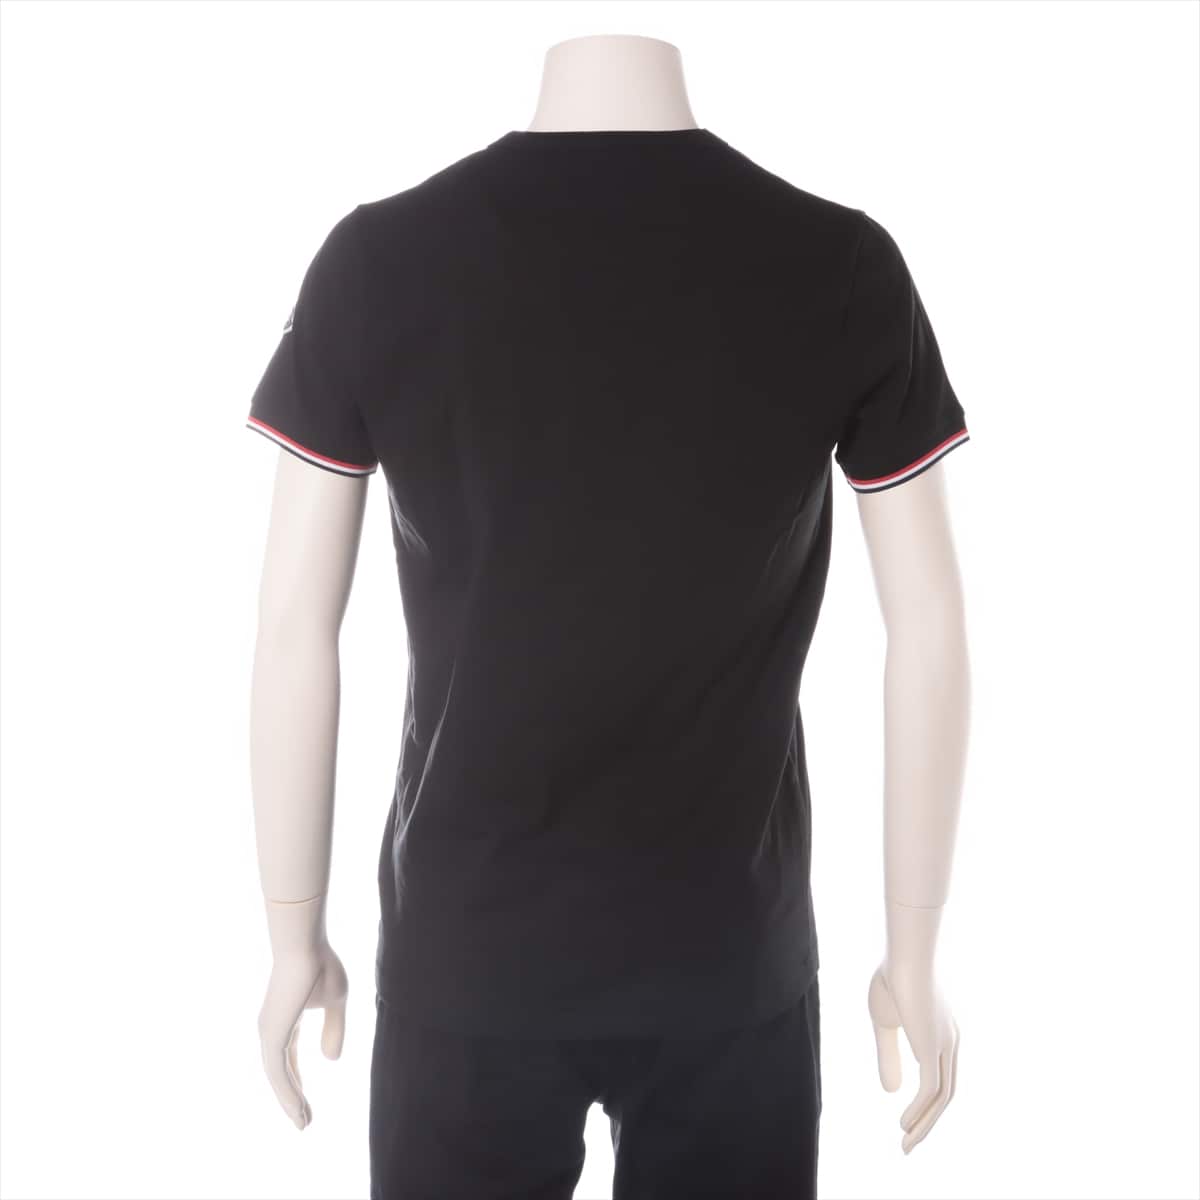 Moncler 19-year Cotton T-shirt M Men's Black